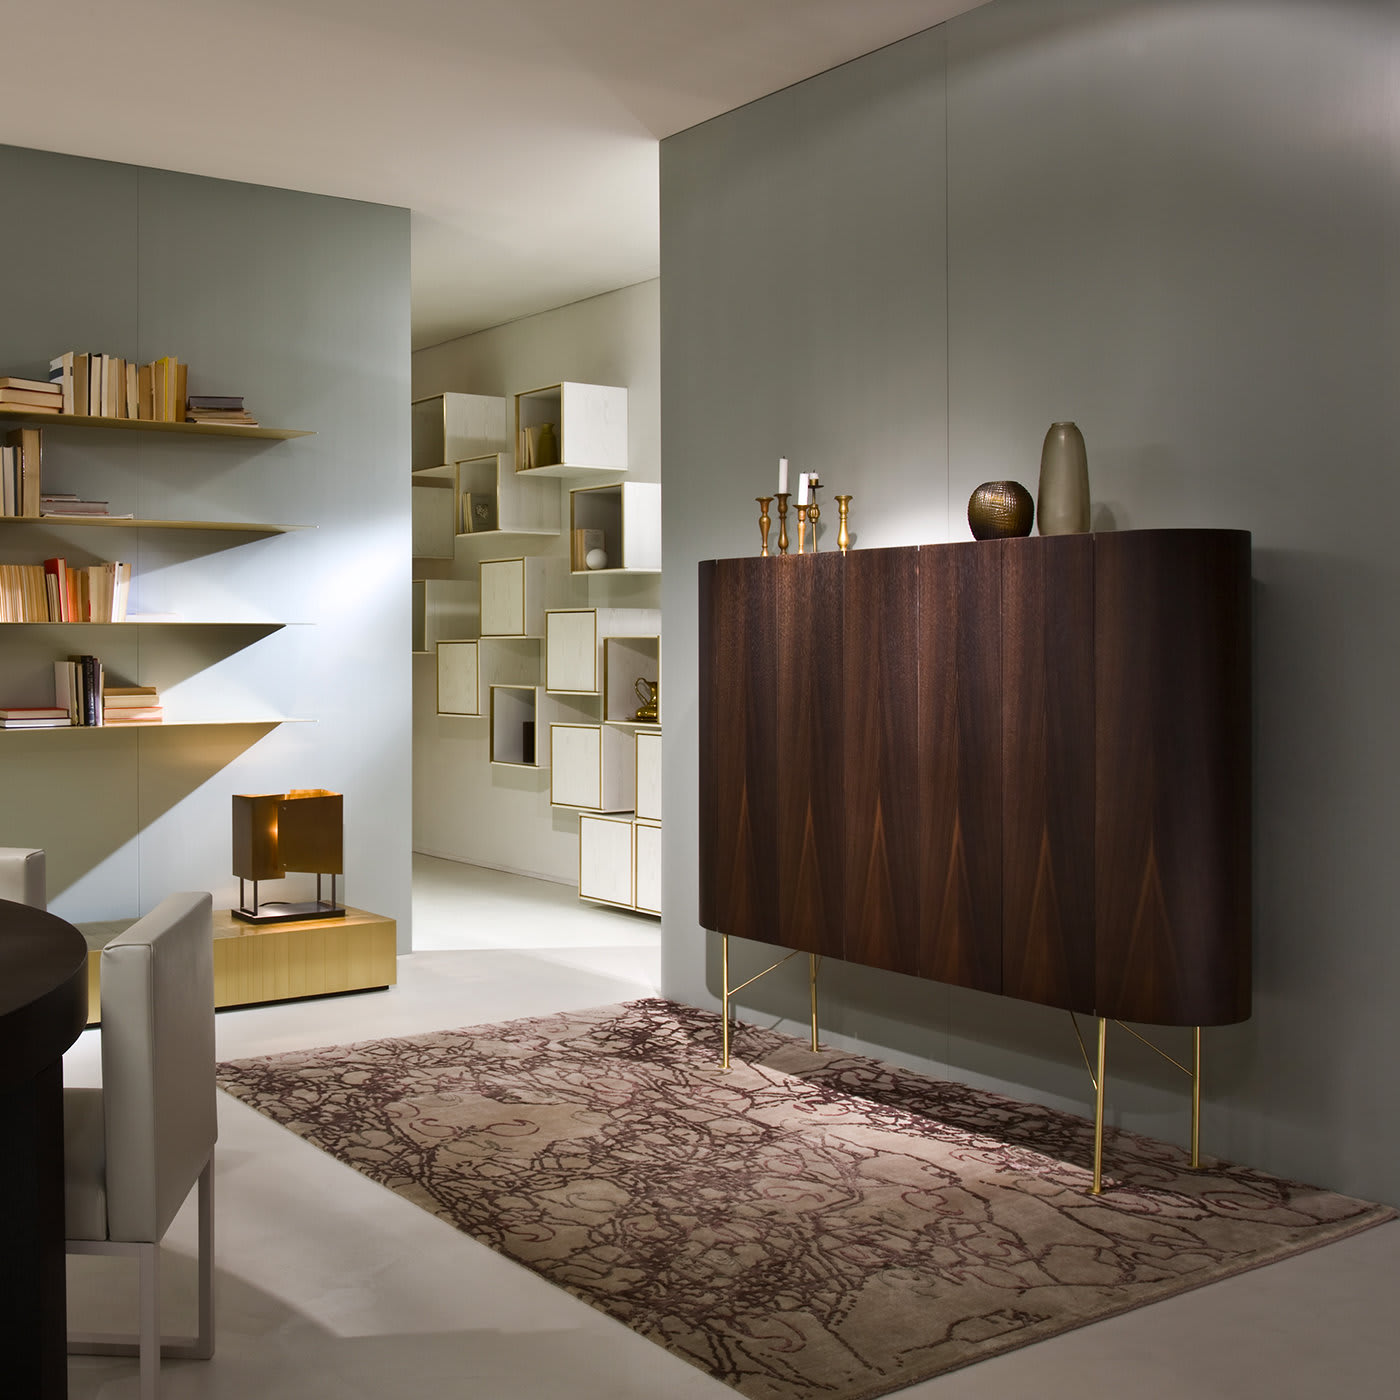 Collections Cabinet by Bartoli Design - Laura Meroni